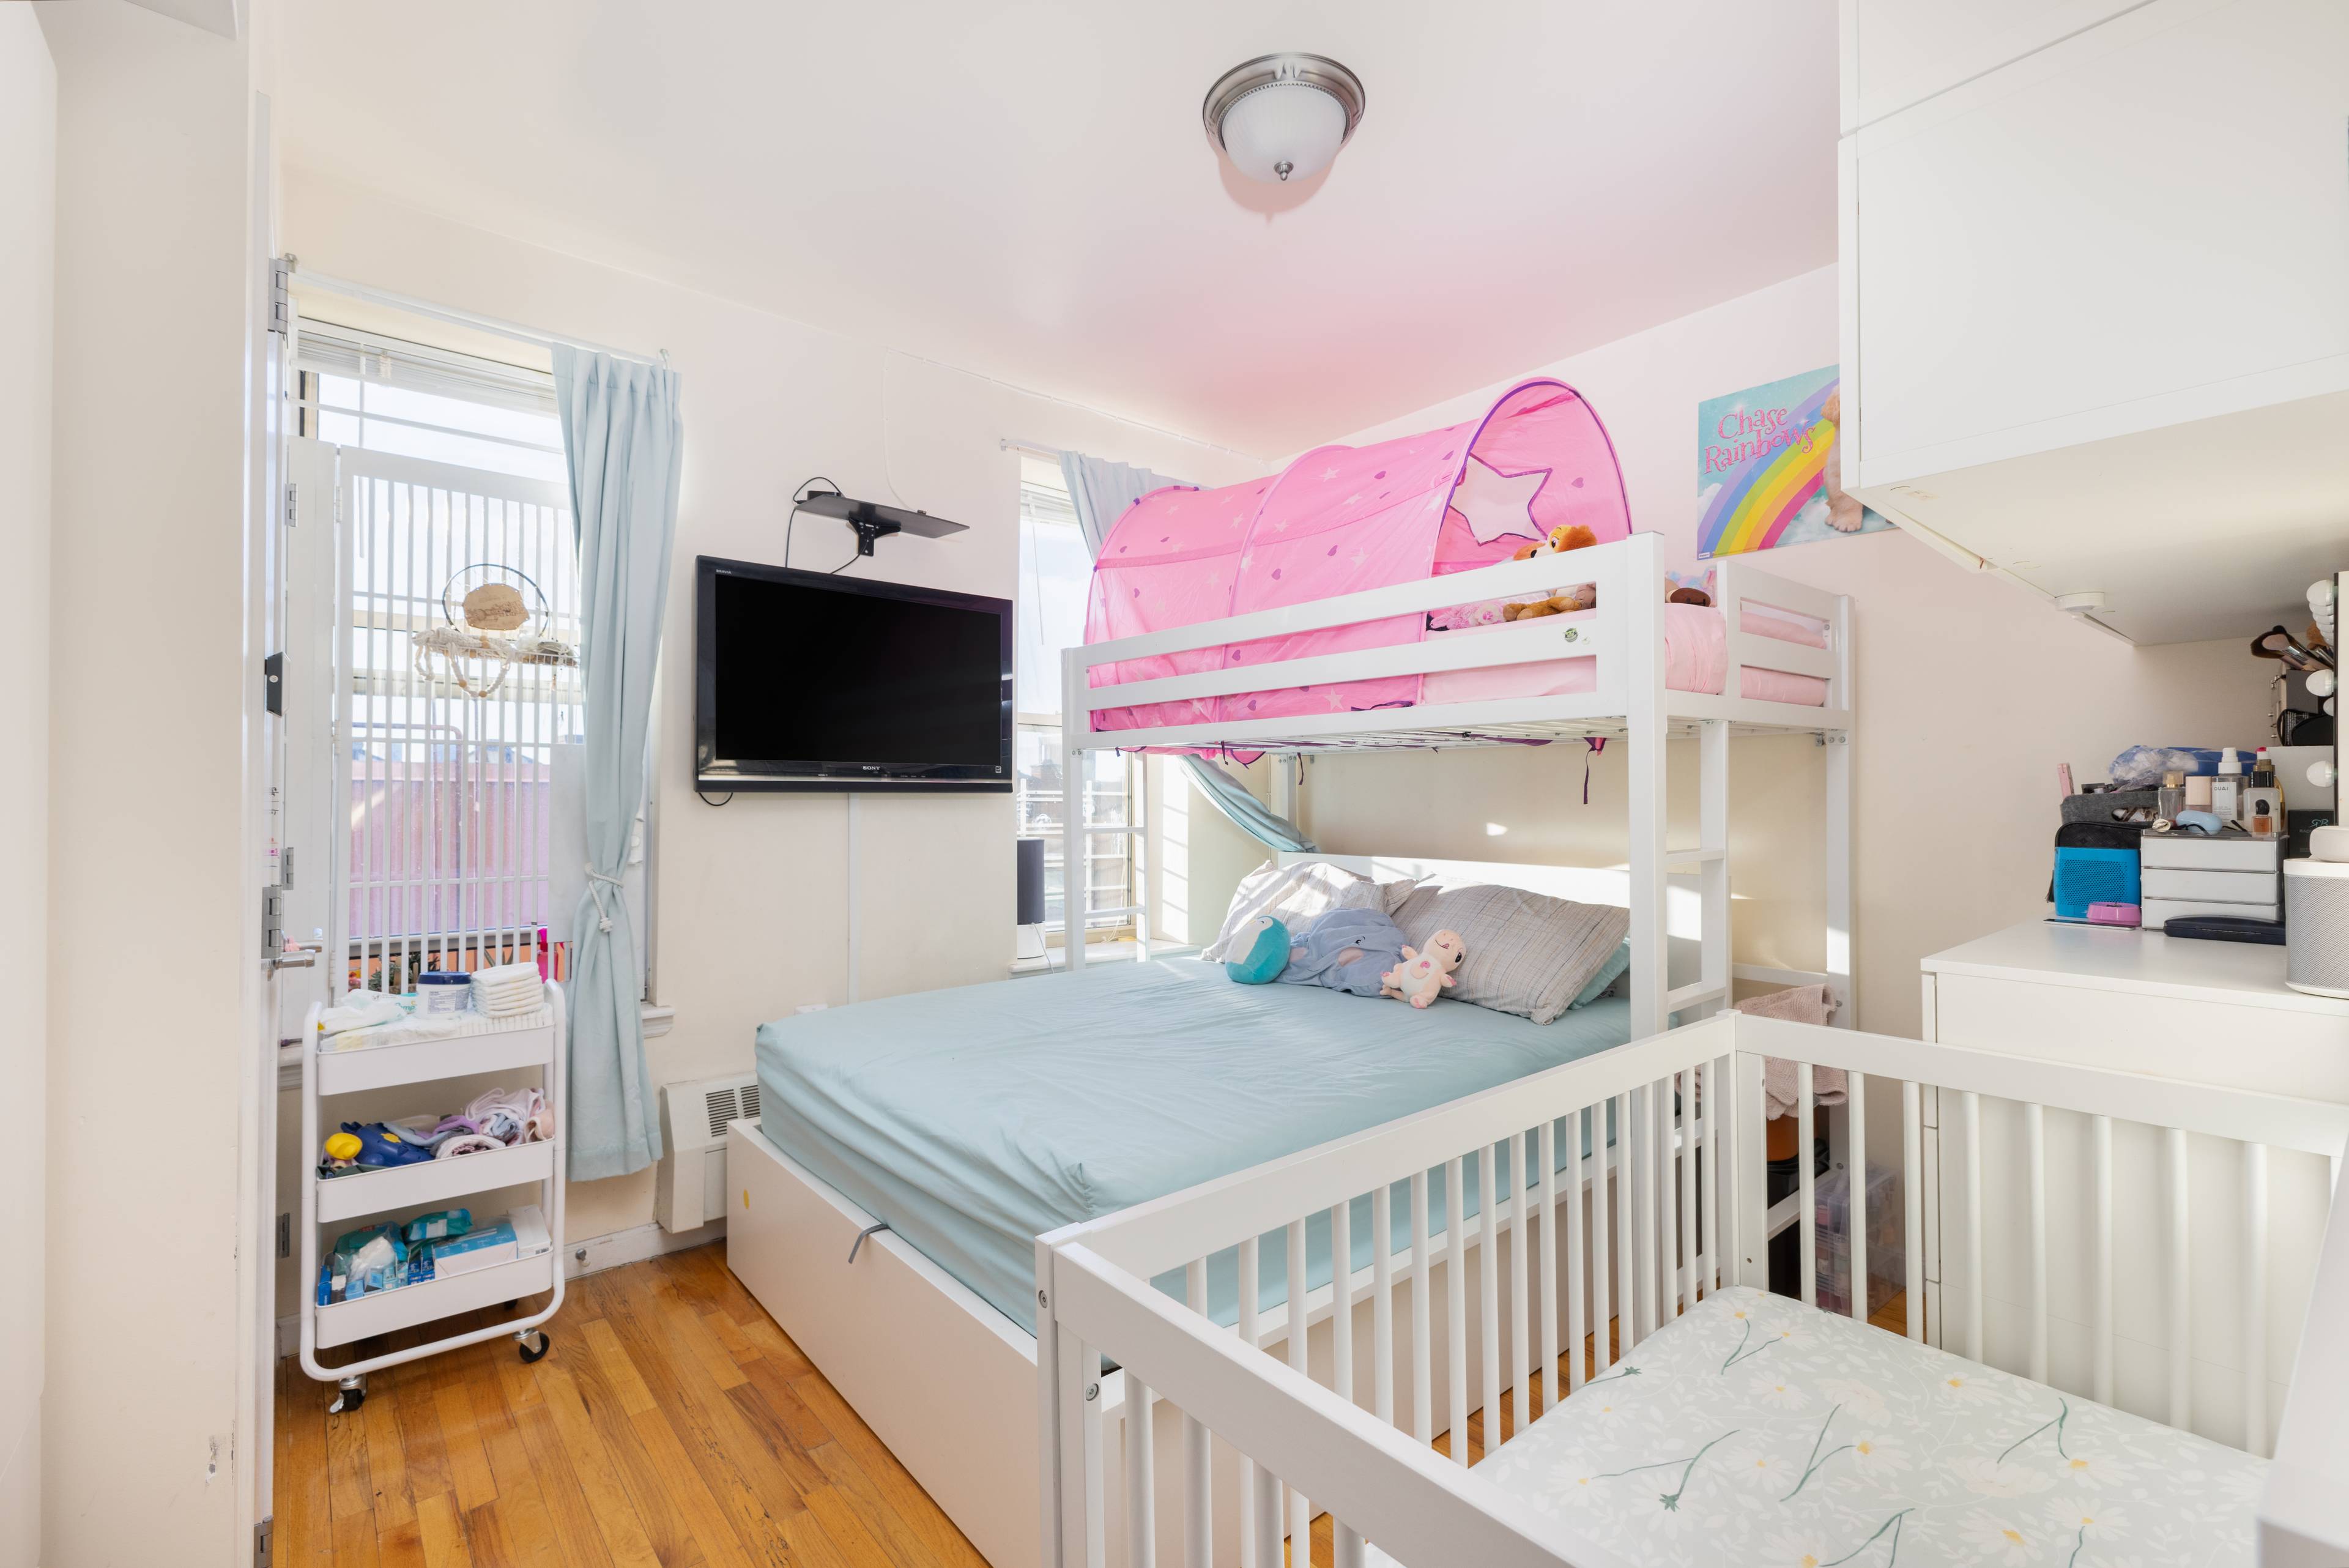 City Comfort: Welcoming 1-Bedroom Apartment in Vibrant Upper West Side